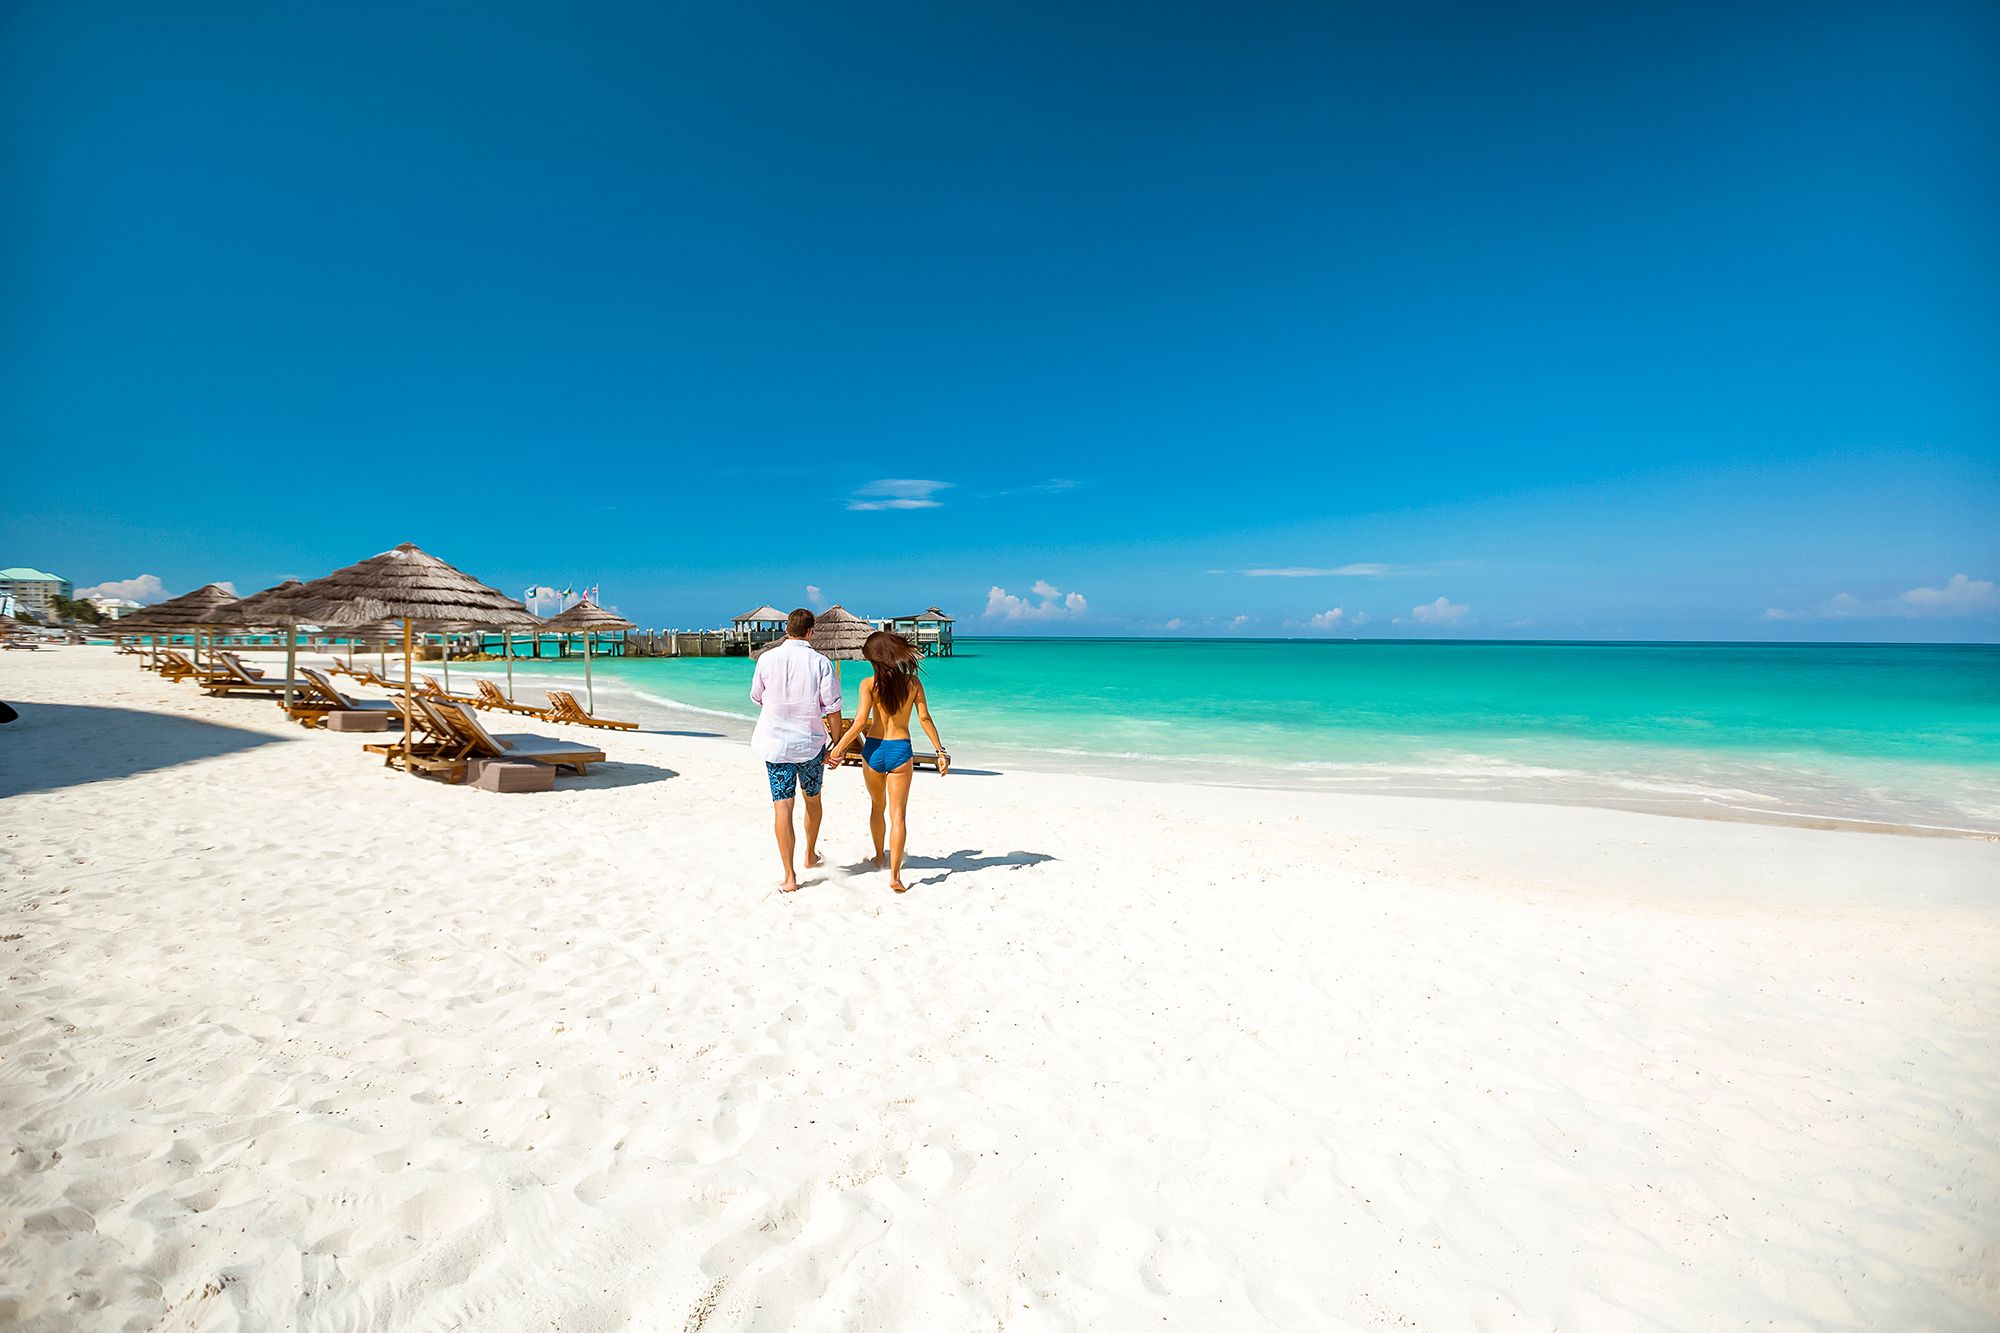 Sandals Royal Bahamian Couple Walking Beach